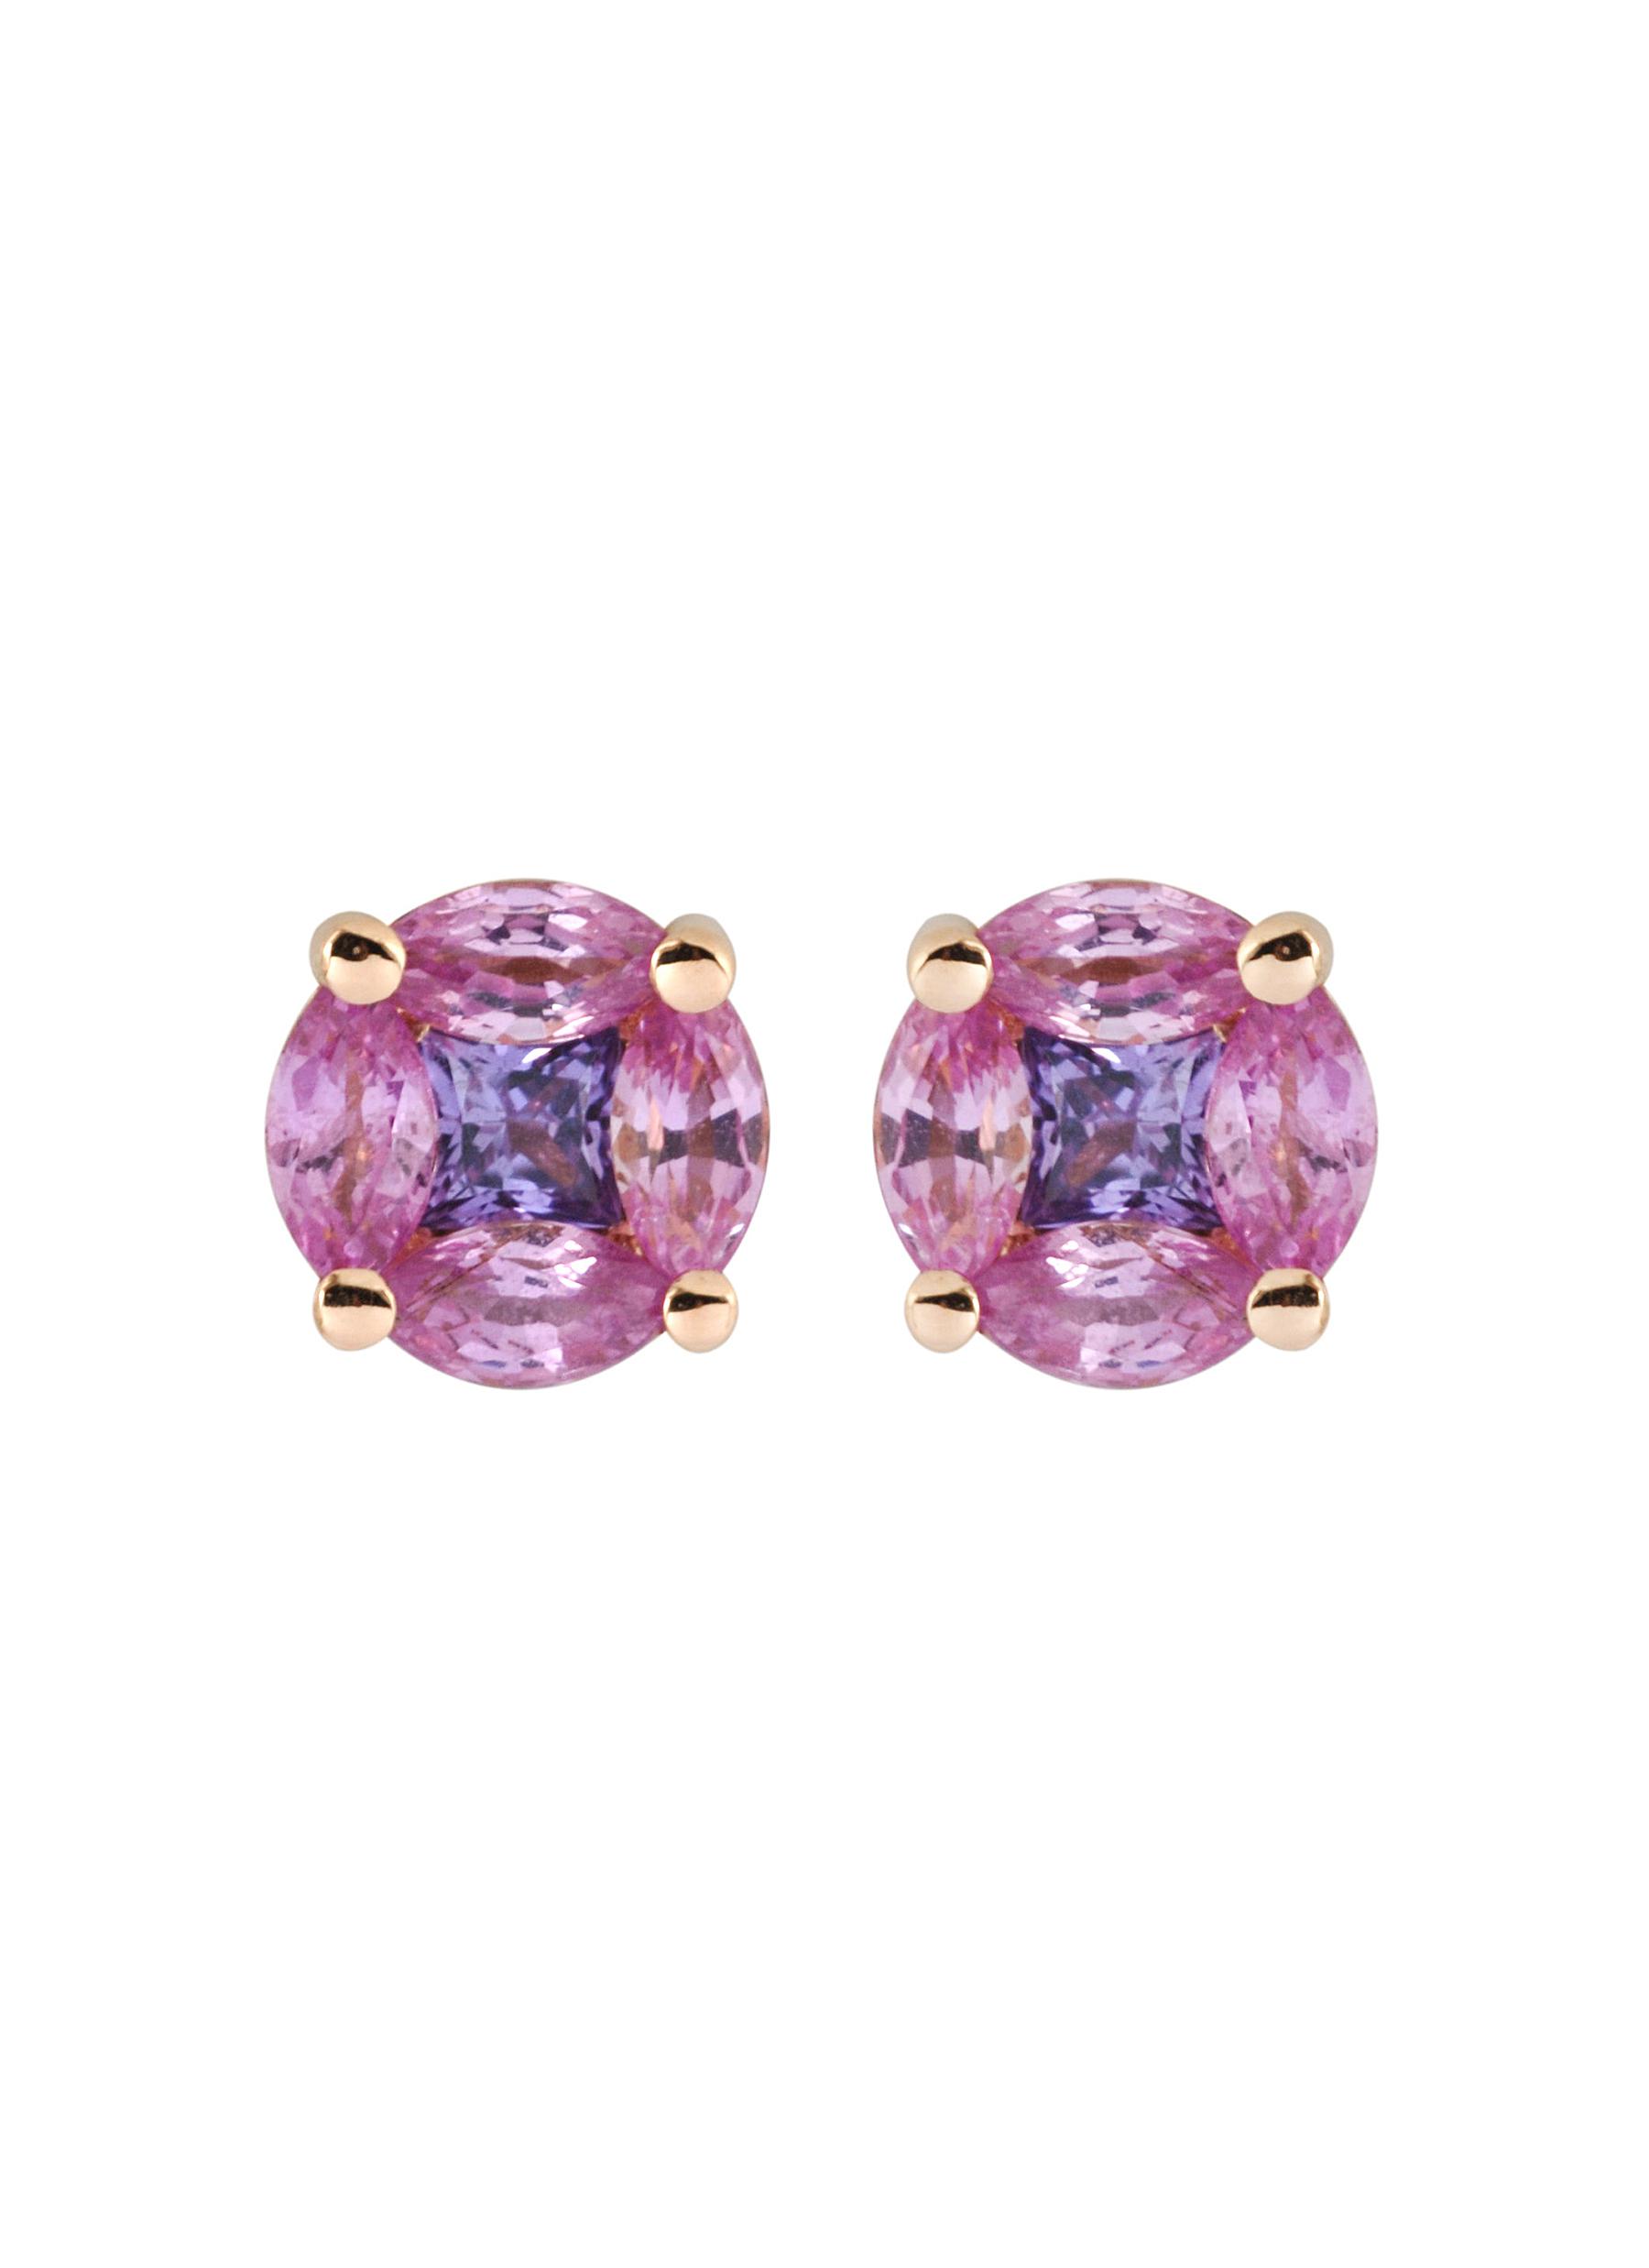 KAVANT & SHARART ‘GeoArt' Bicoloured Sapphire 18K Rose Gold Earrings